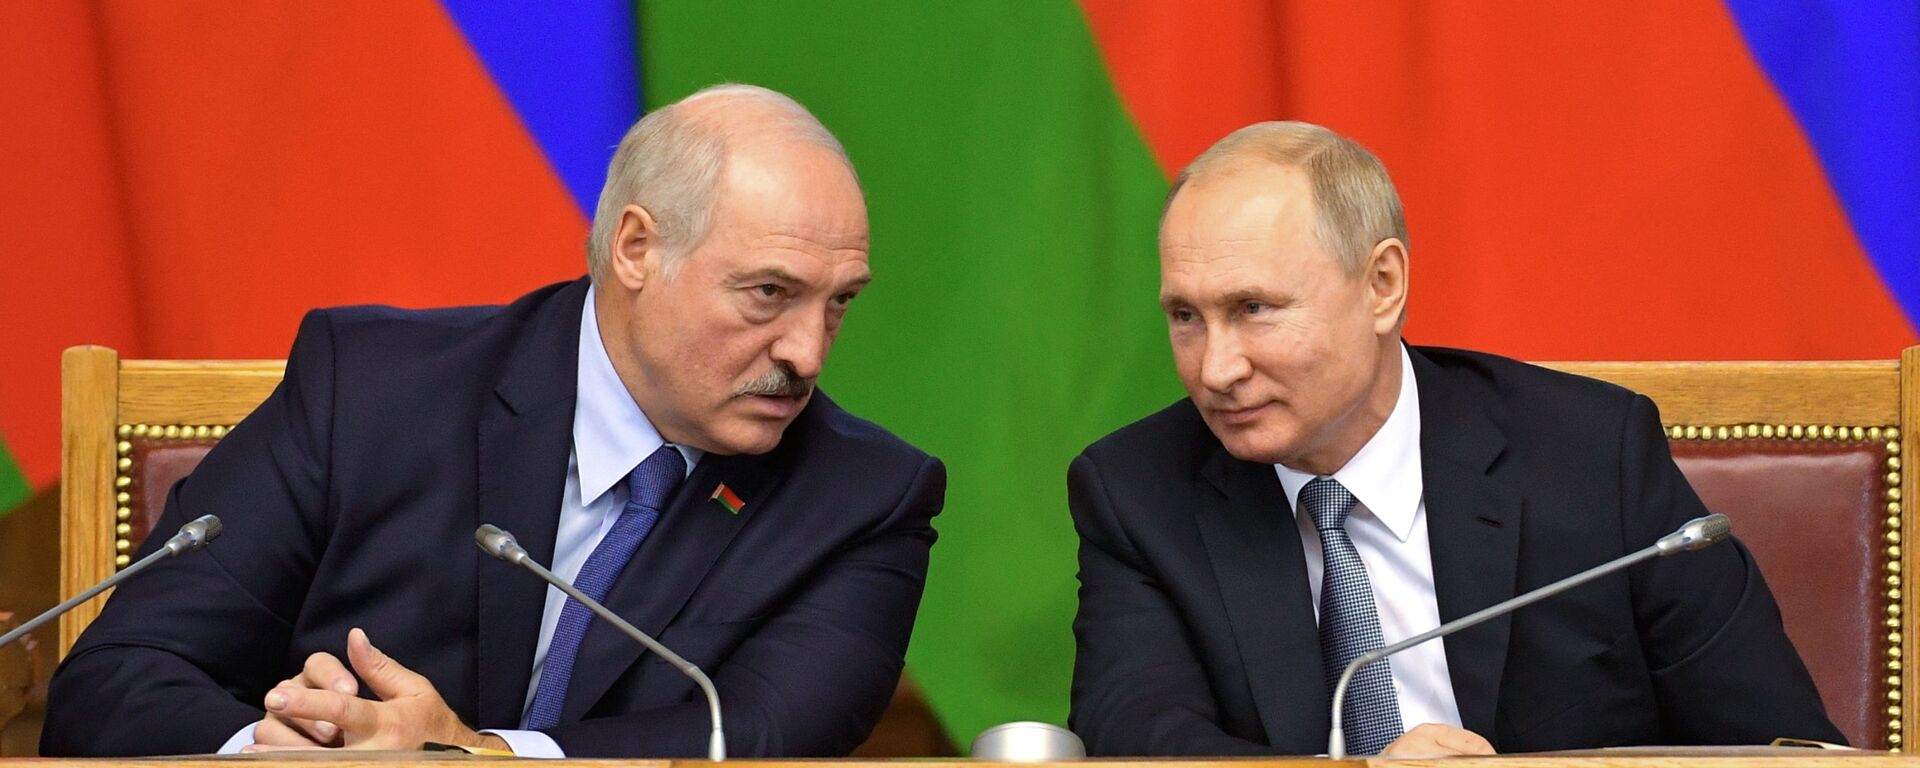 El presidente de Bielorrusia, Alexandr Lukashenko, y el presidente de Rusia, Vladímir Putin - Sputnik Mundo, 1920, 09.09.2021